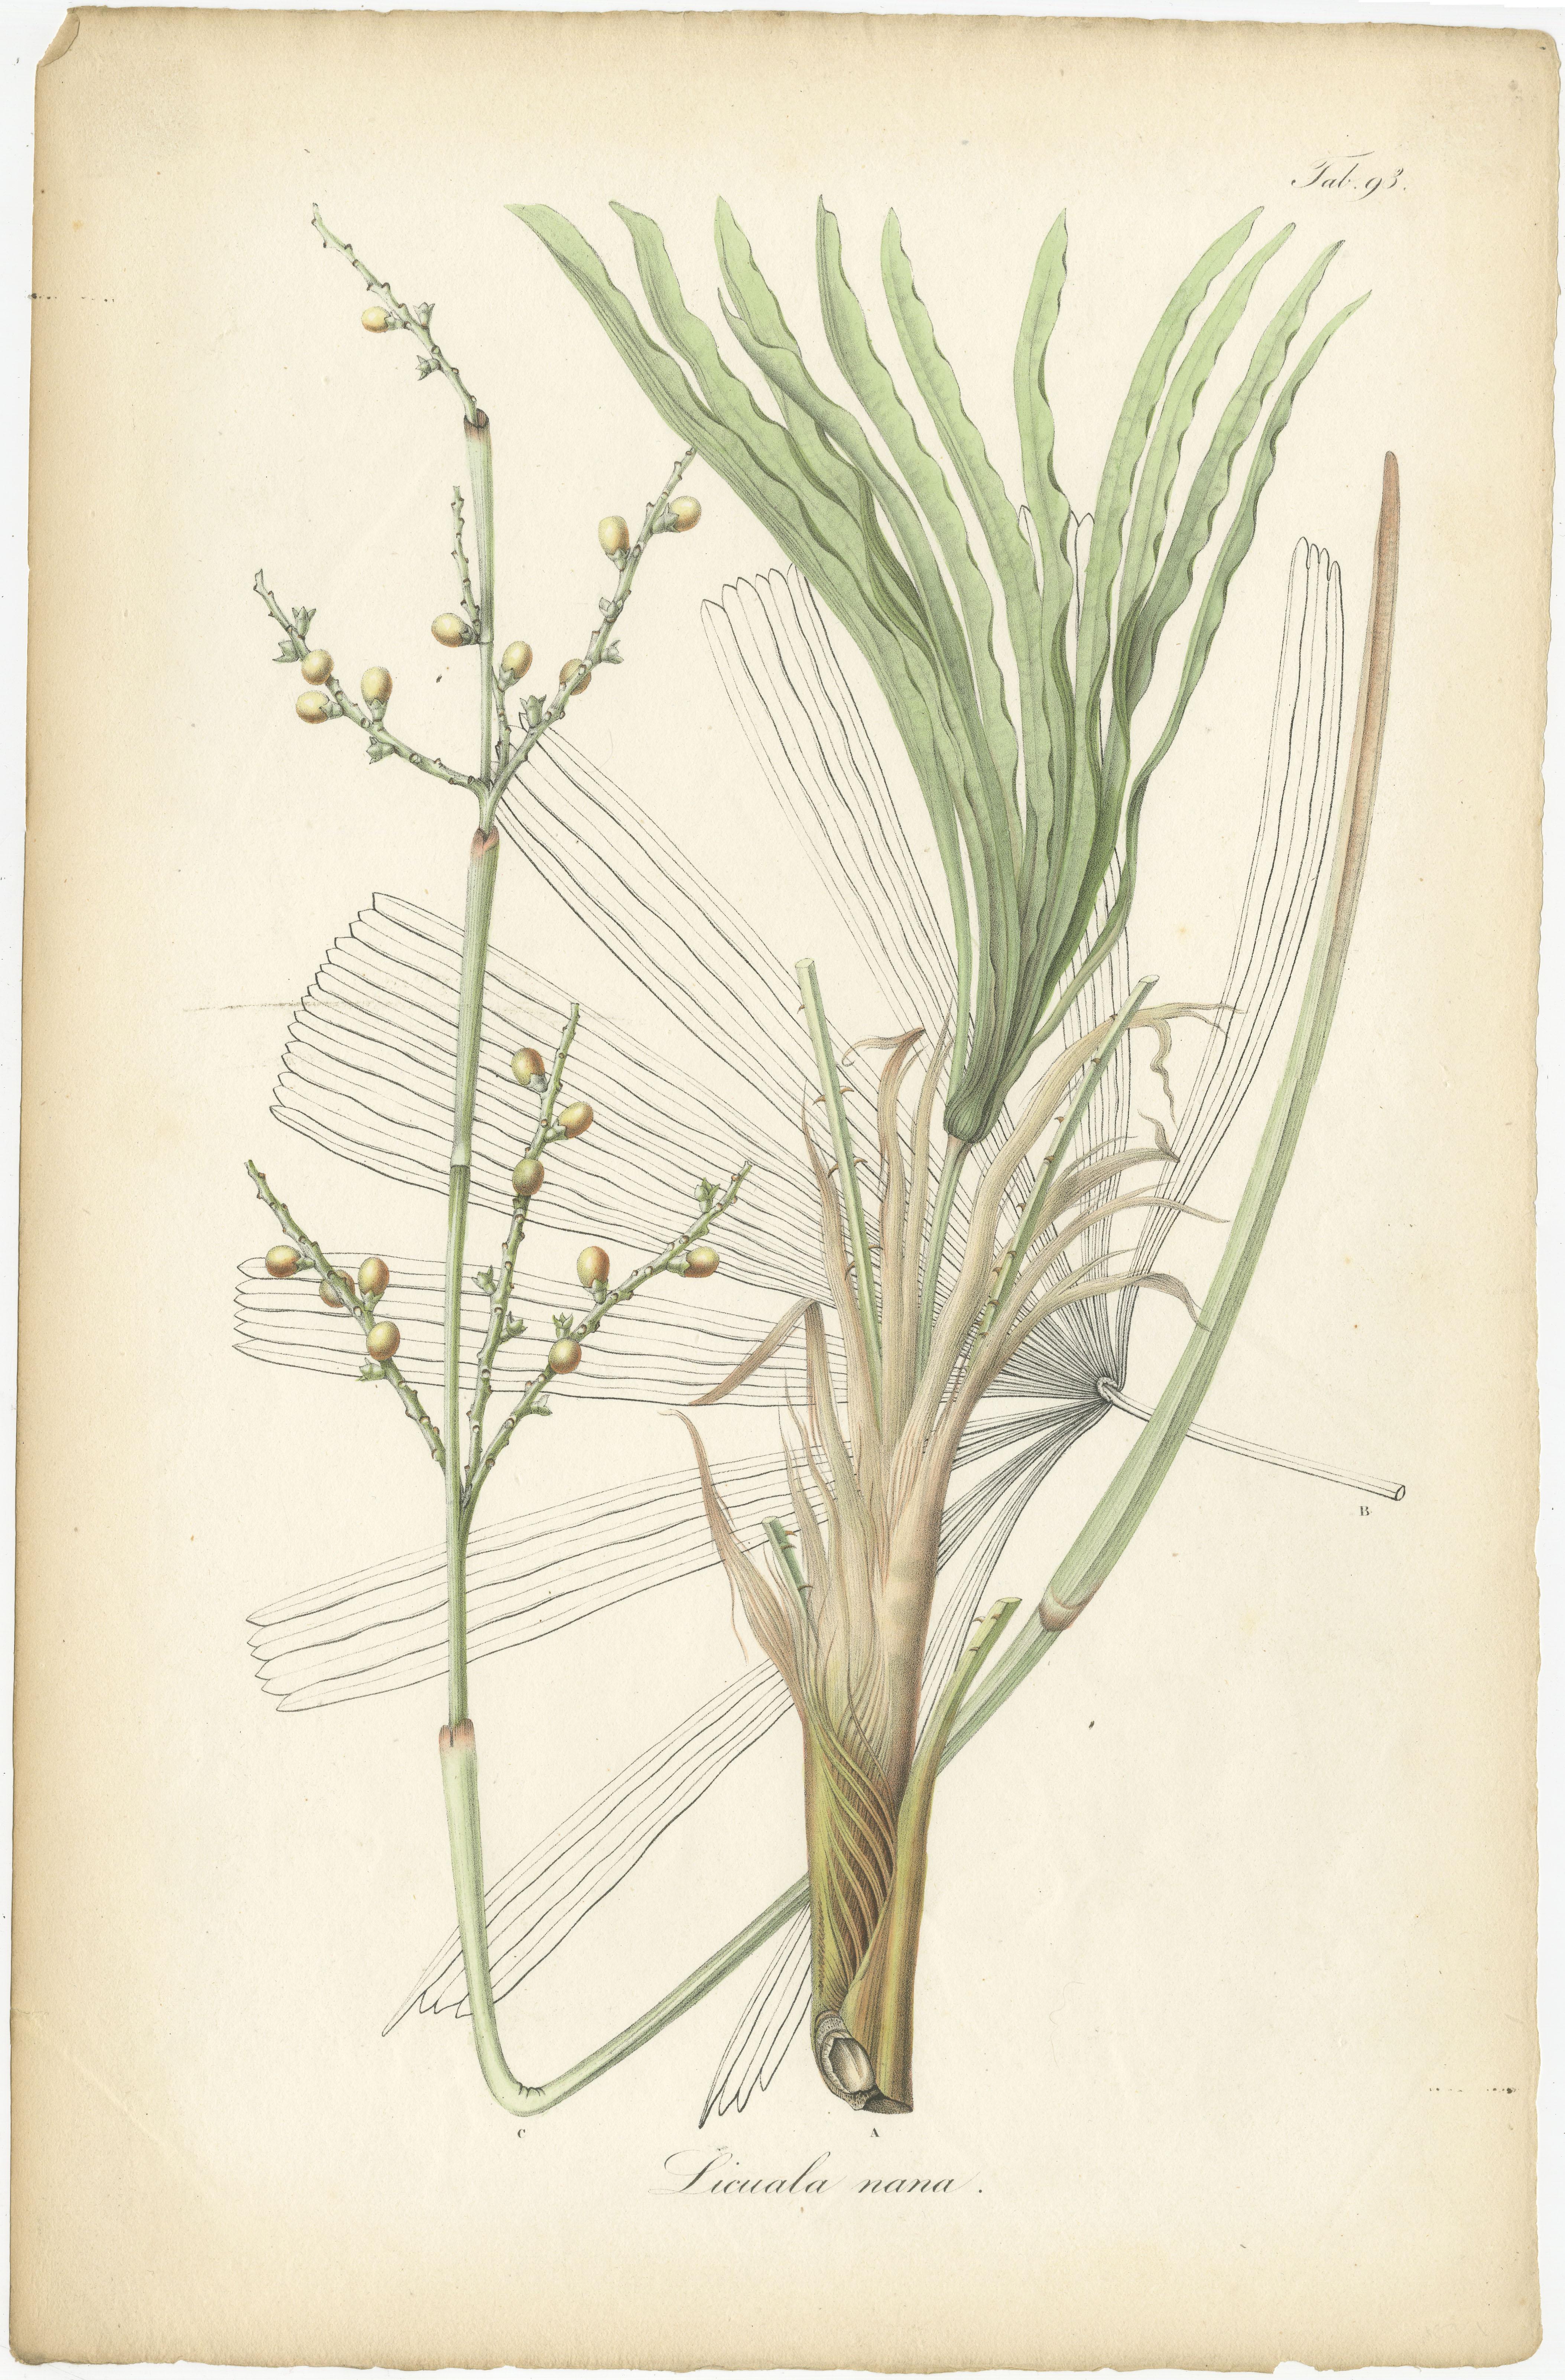 Antique botany print titled 'Licuala nana'. Original old print of a species of fan palm. This print originates from volume 2 of 'Rumphia, sive, Commentationes botanicæ imprimis de plantis Indiæ Orientalis (..)'. Published by C.L. Blume, 1836. 

Karl